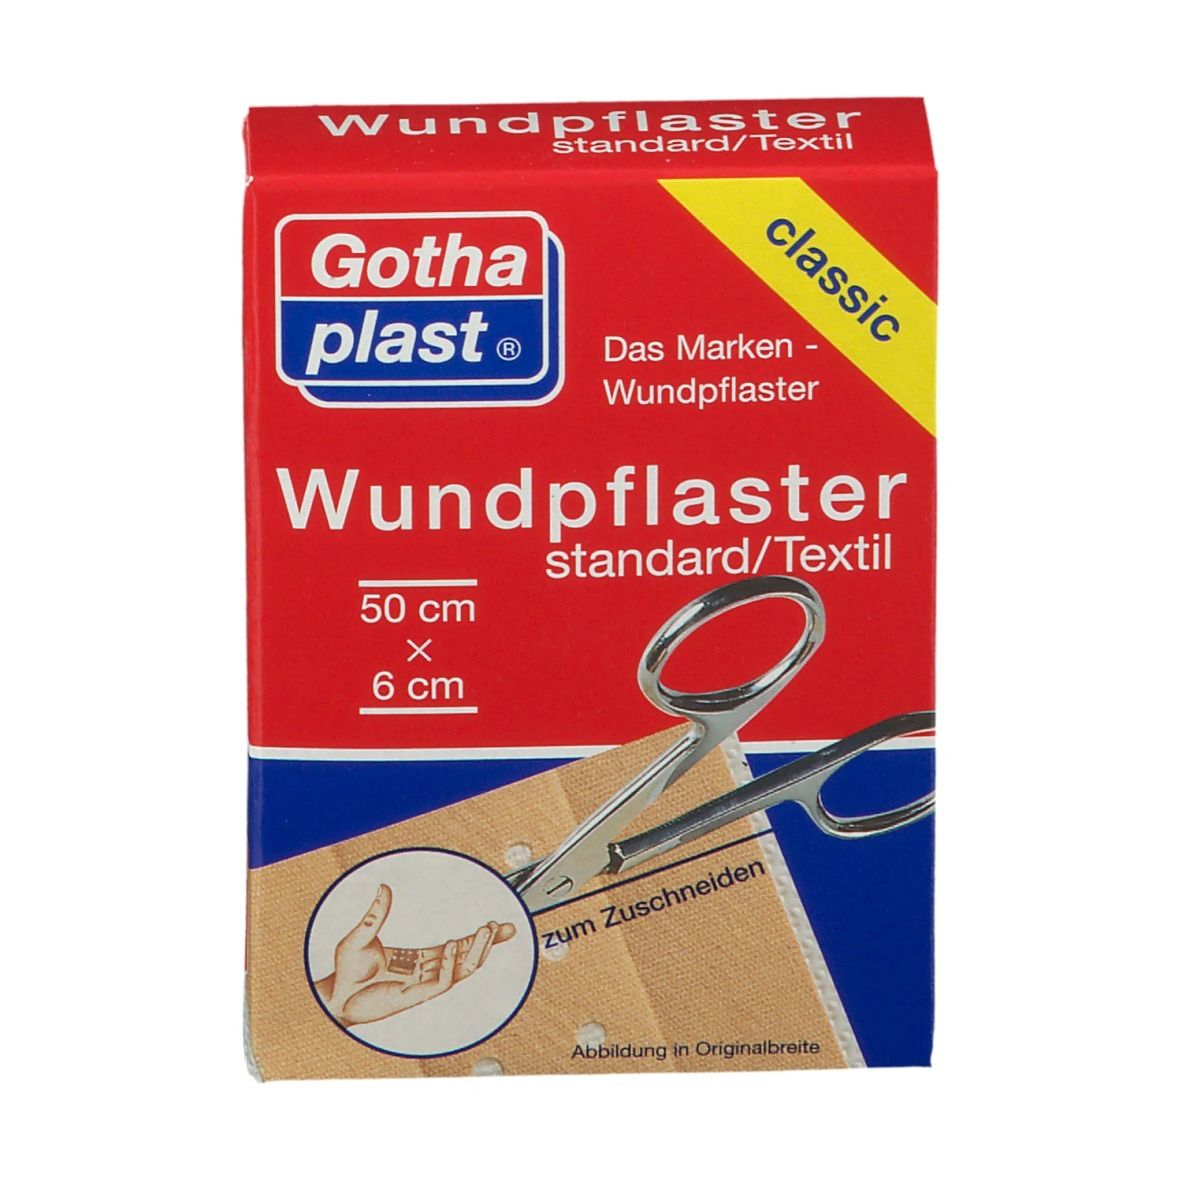 Gothaplast® Wundpflaster standard/Textil 50 cm x 6 cm